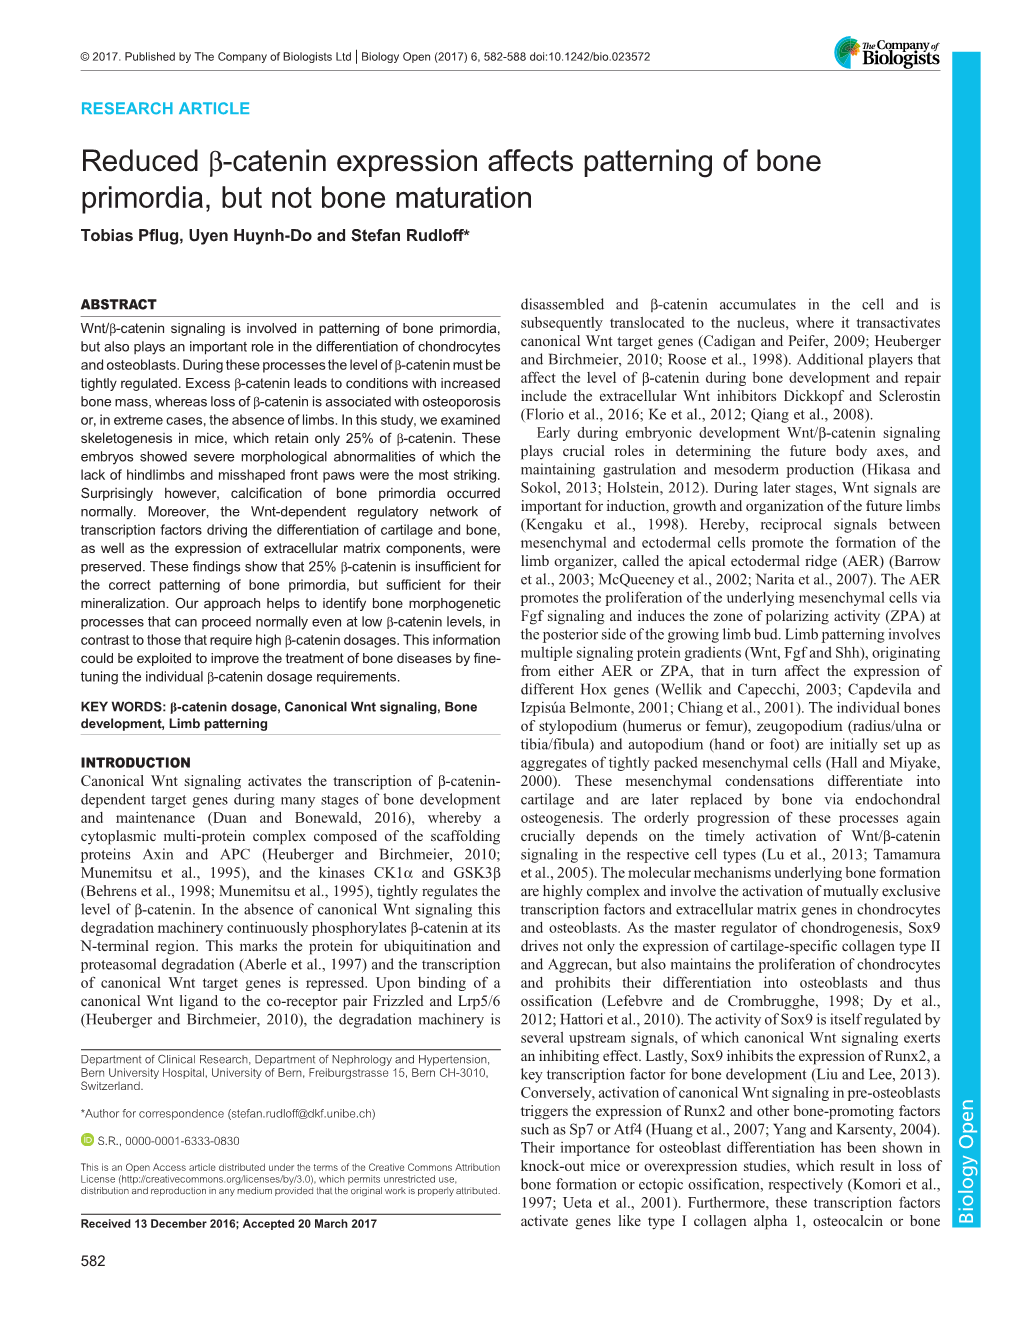 Reduced Β-Catenin Expression Affects Patterning of Bone Primordia, but Not Bone Maturation Tobias Pflug, Uyen Huynh-Do and Stefan Rudloff*